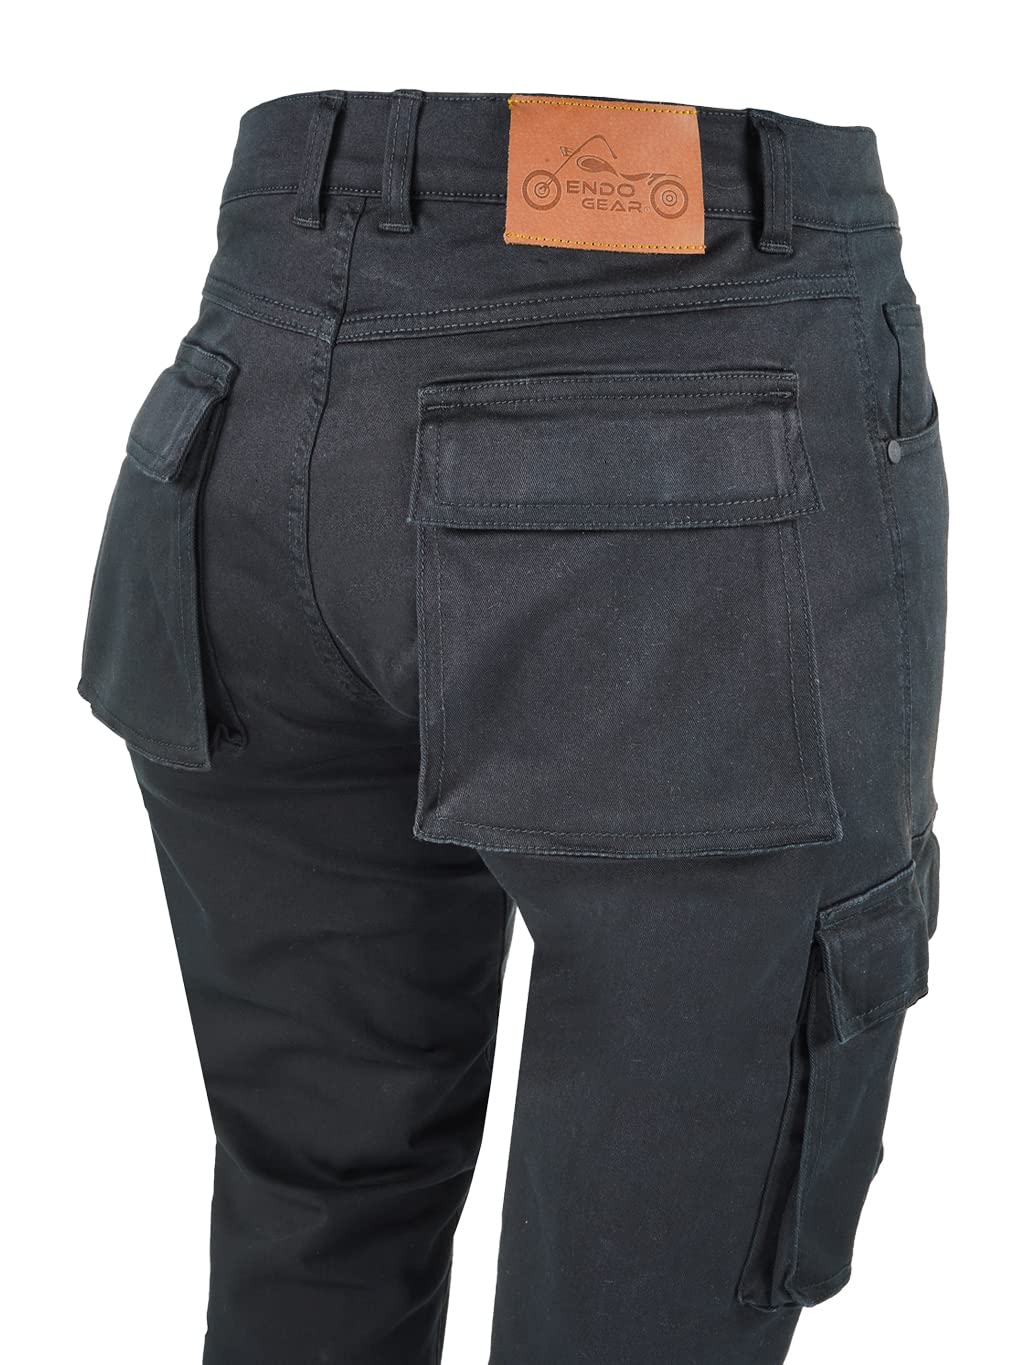 Alpinestars Deep South Cargo jeans | Motoinside-Your Ride Style